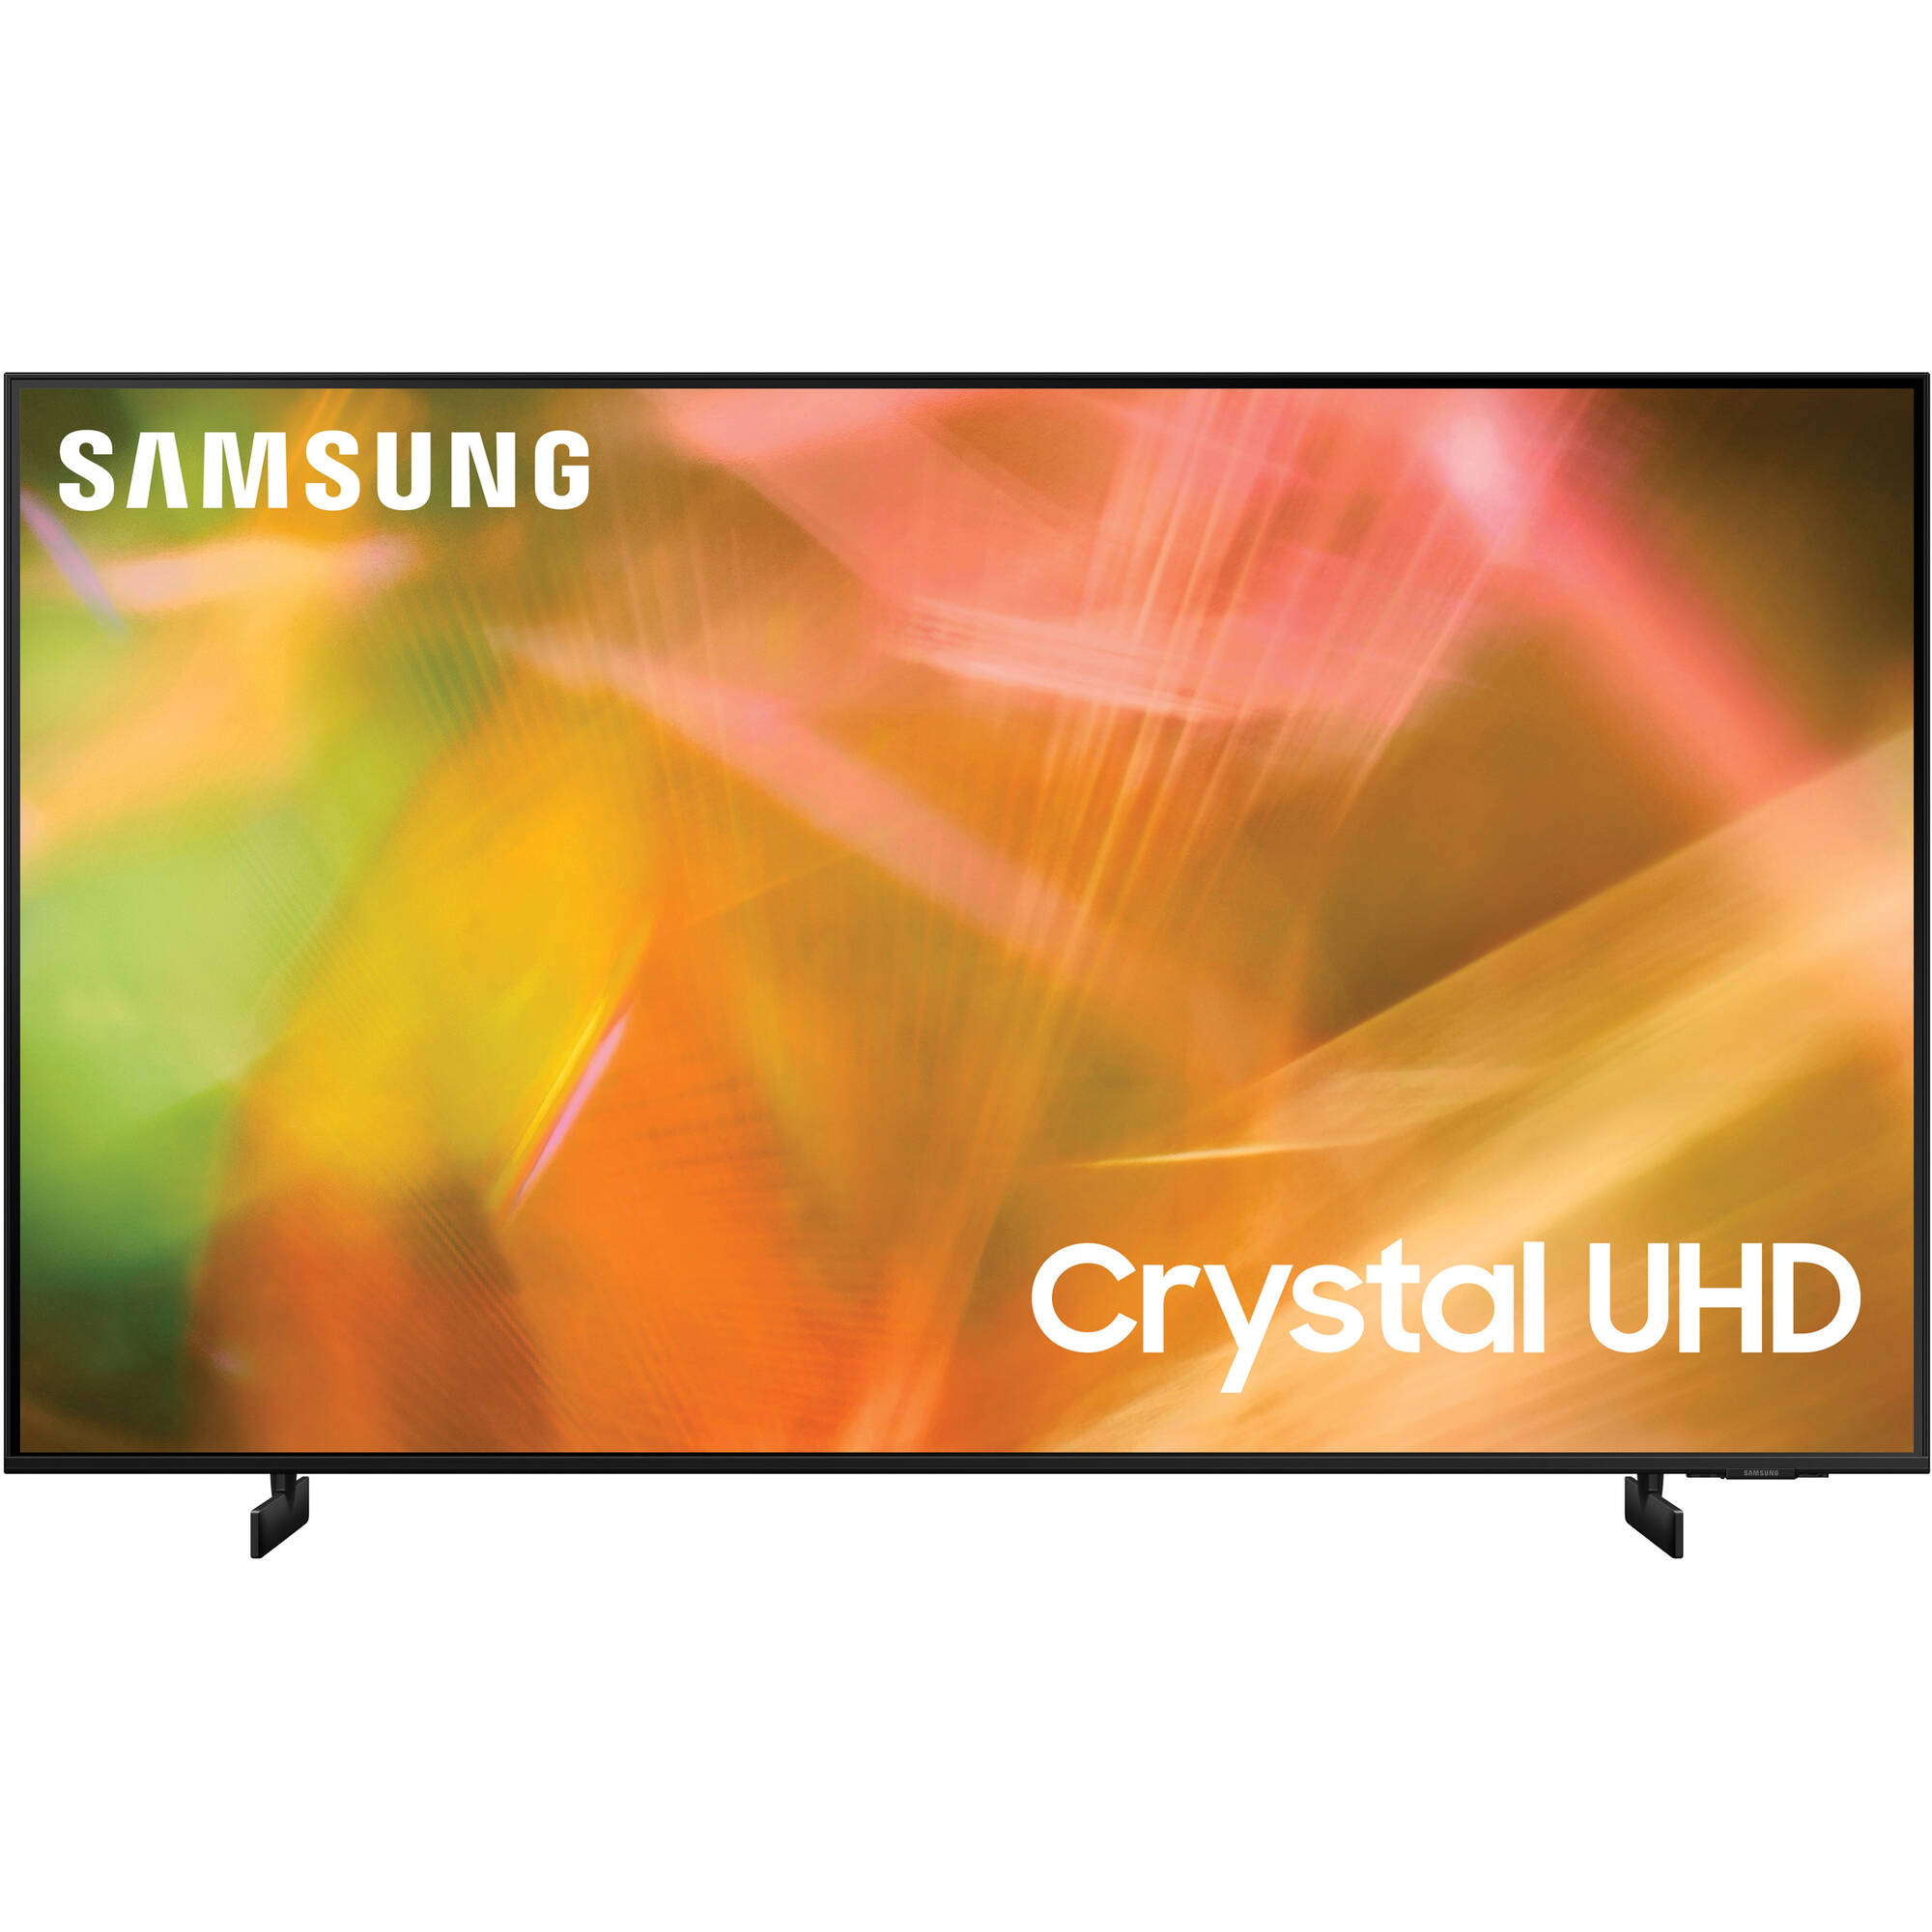 Samsung Au8000 65 "Clase HDR 4K UHD Smart LED TV